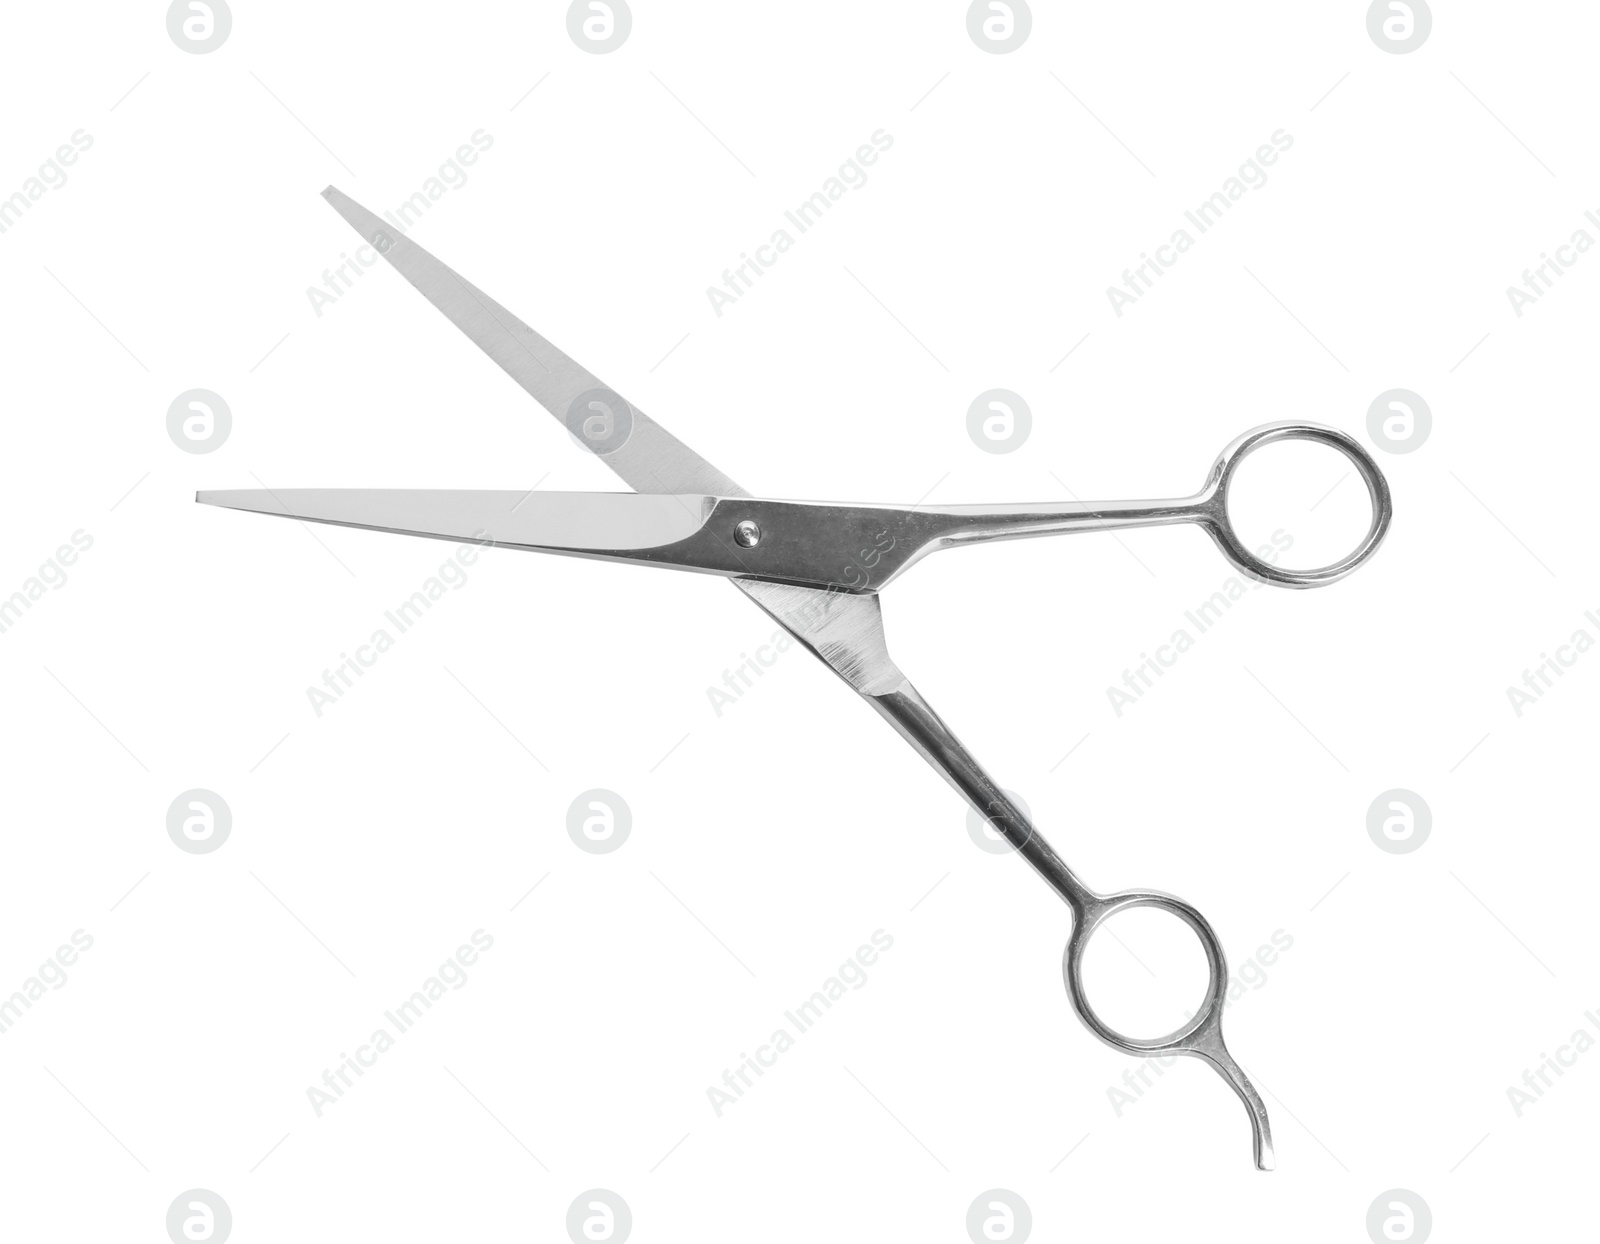 Photo of Pair of sharp hairdresser's scissors on white background